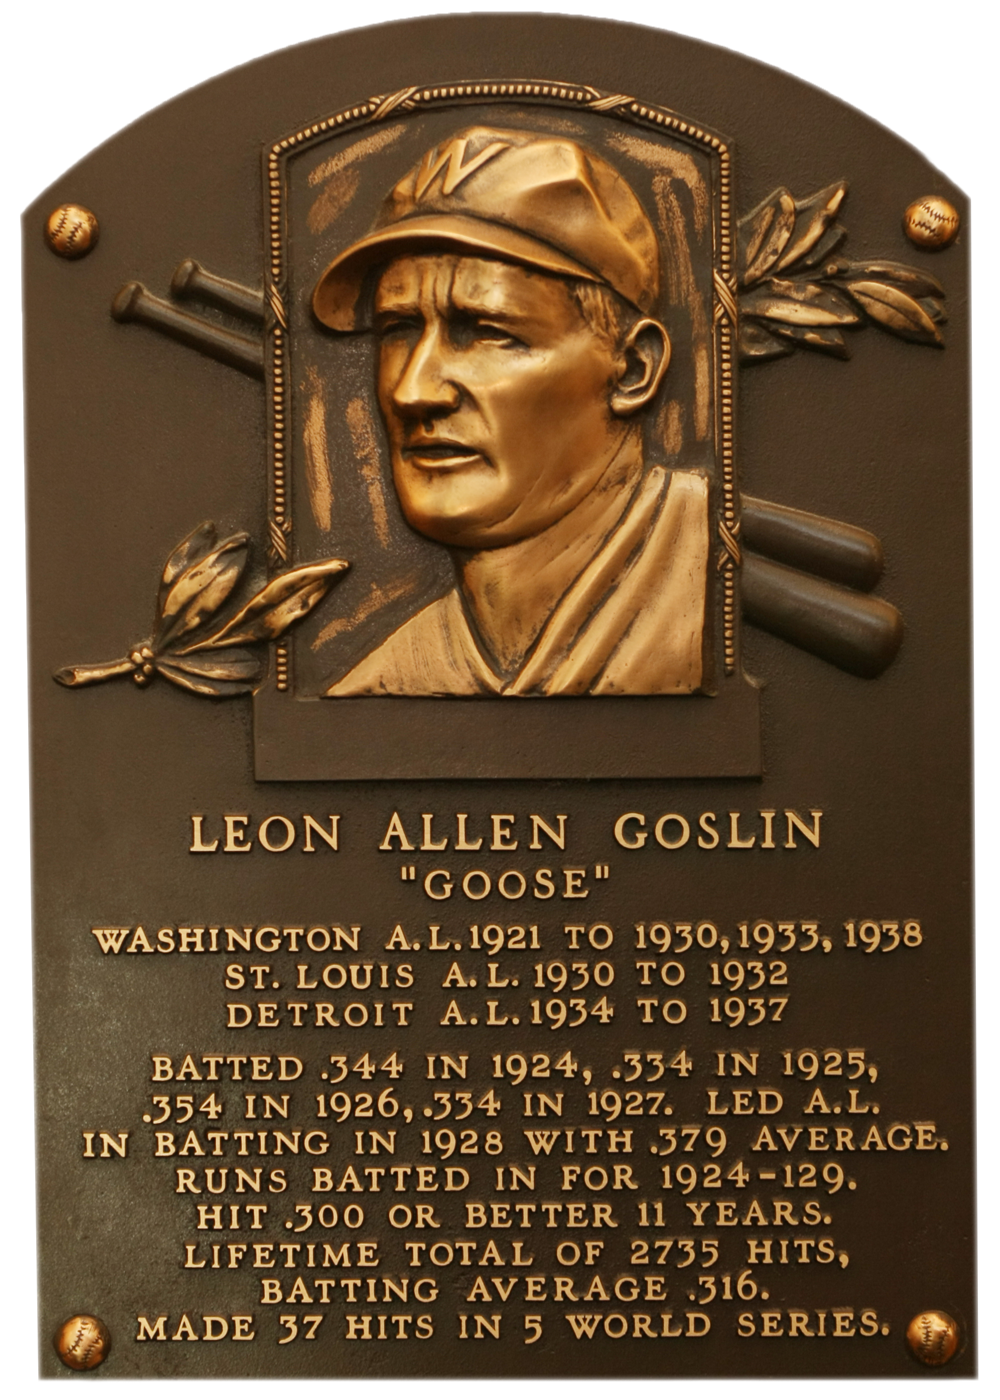 Goose Goslin Hall of Fame plaque